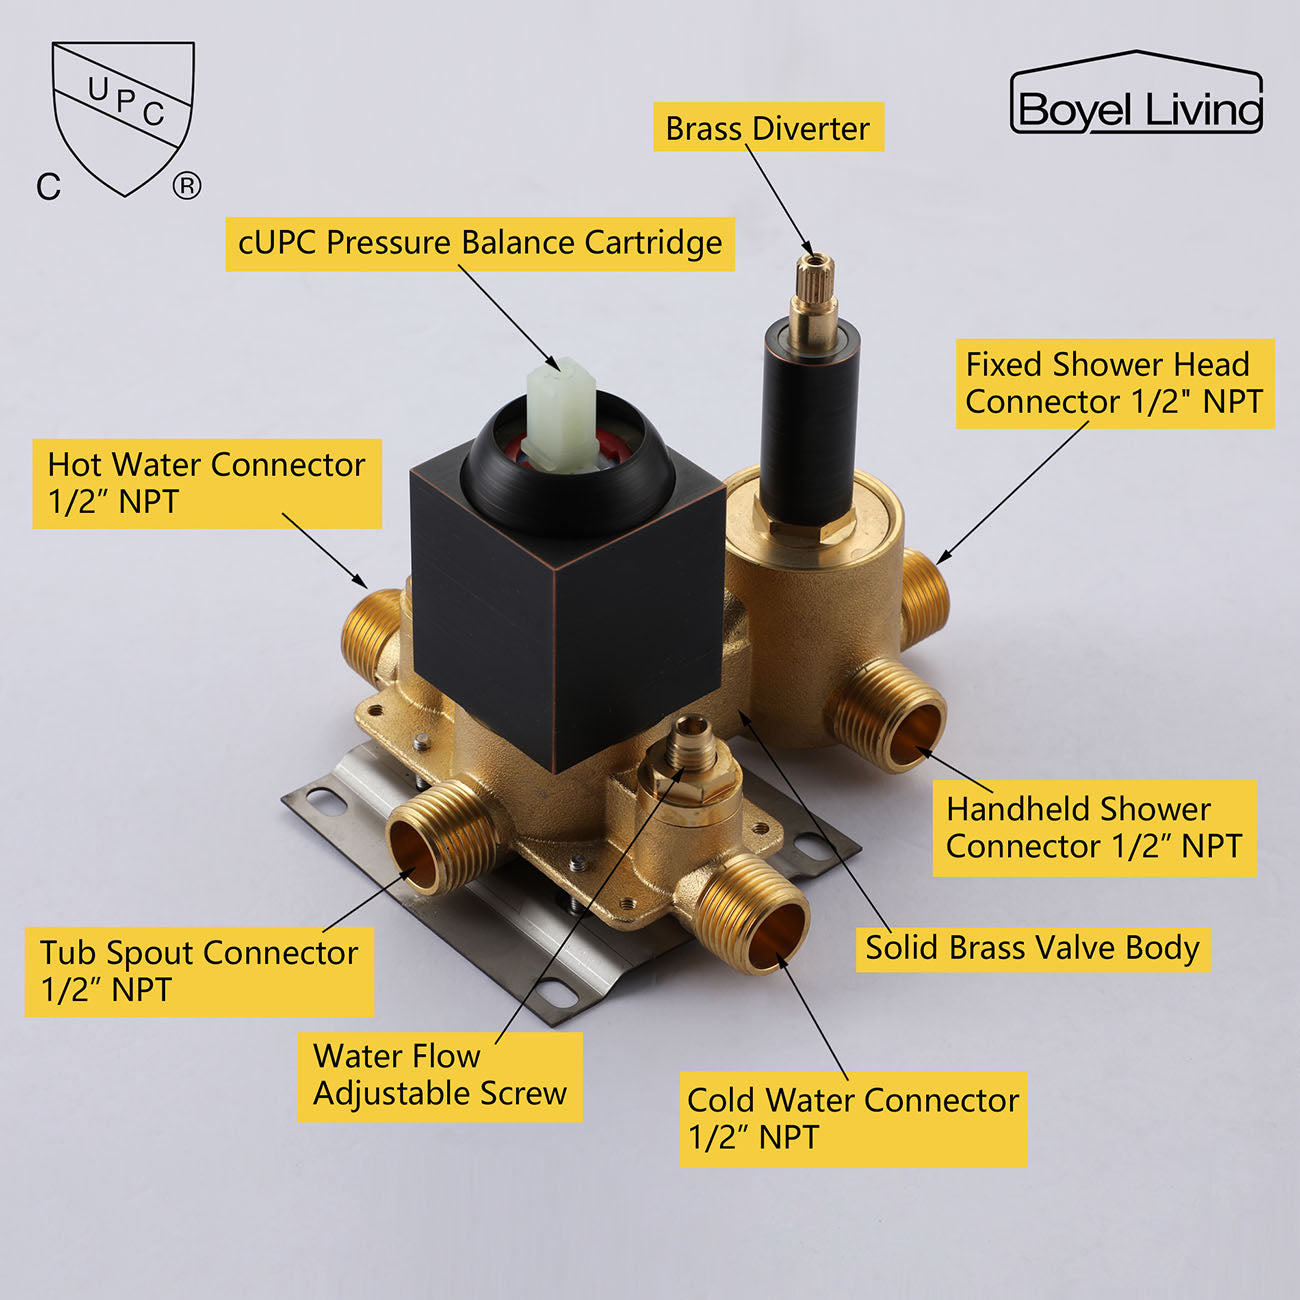 Solid Brass Valve and cUPC Pressure Balance Cartridge